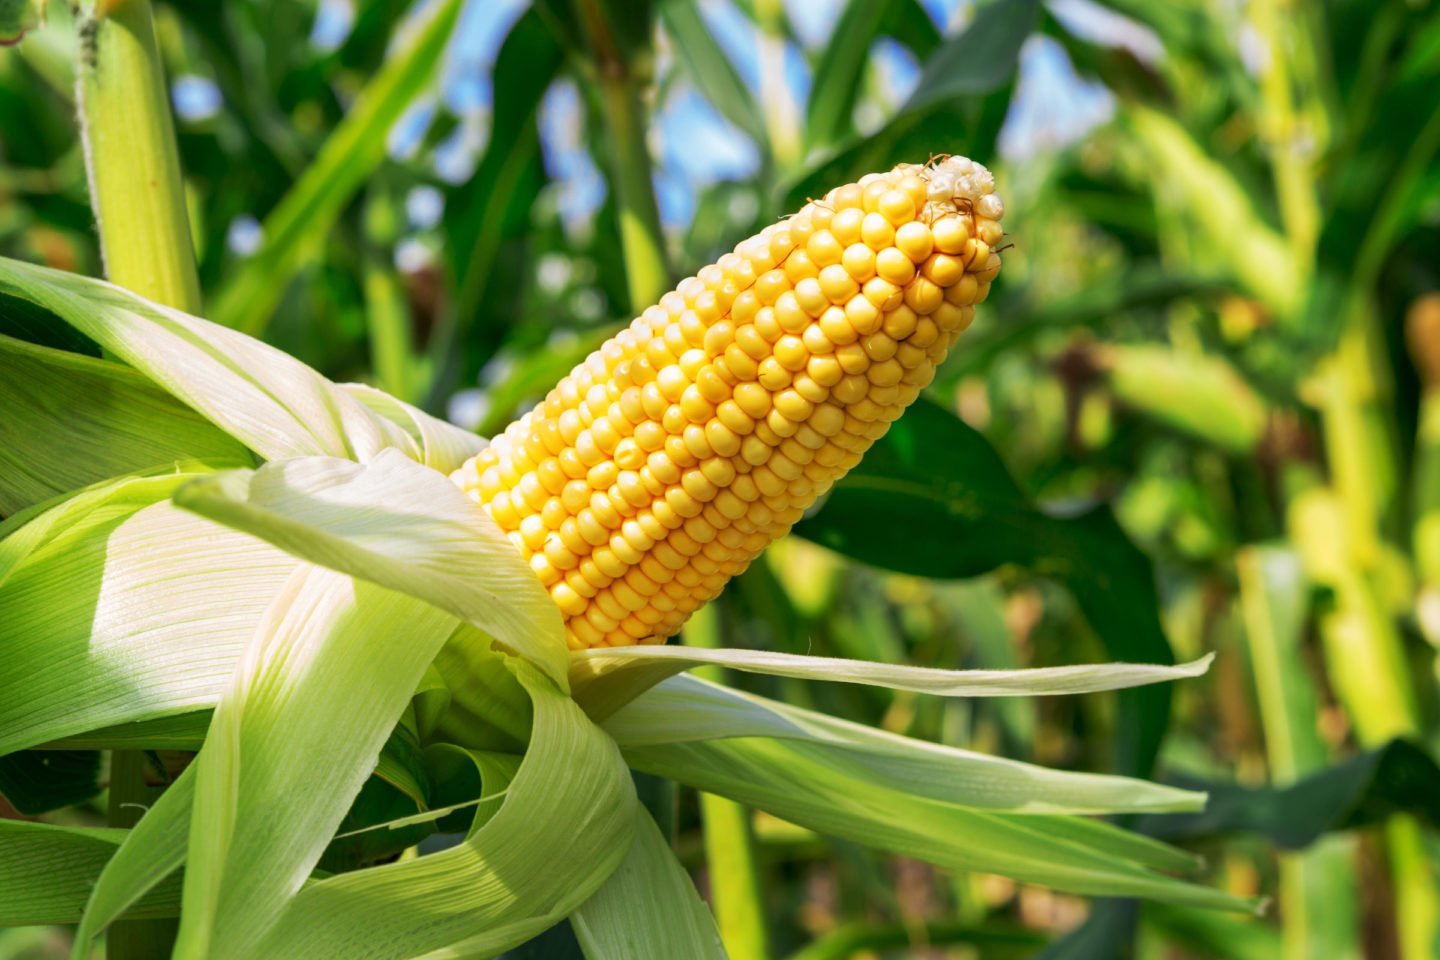 an ear of corn ripening under the sun